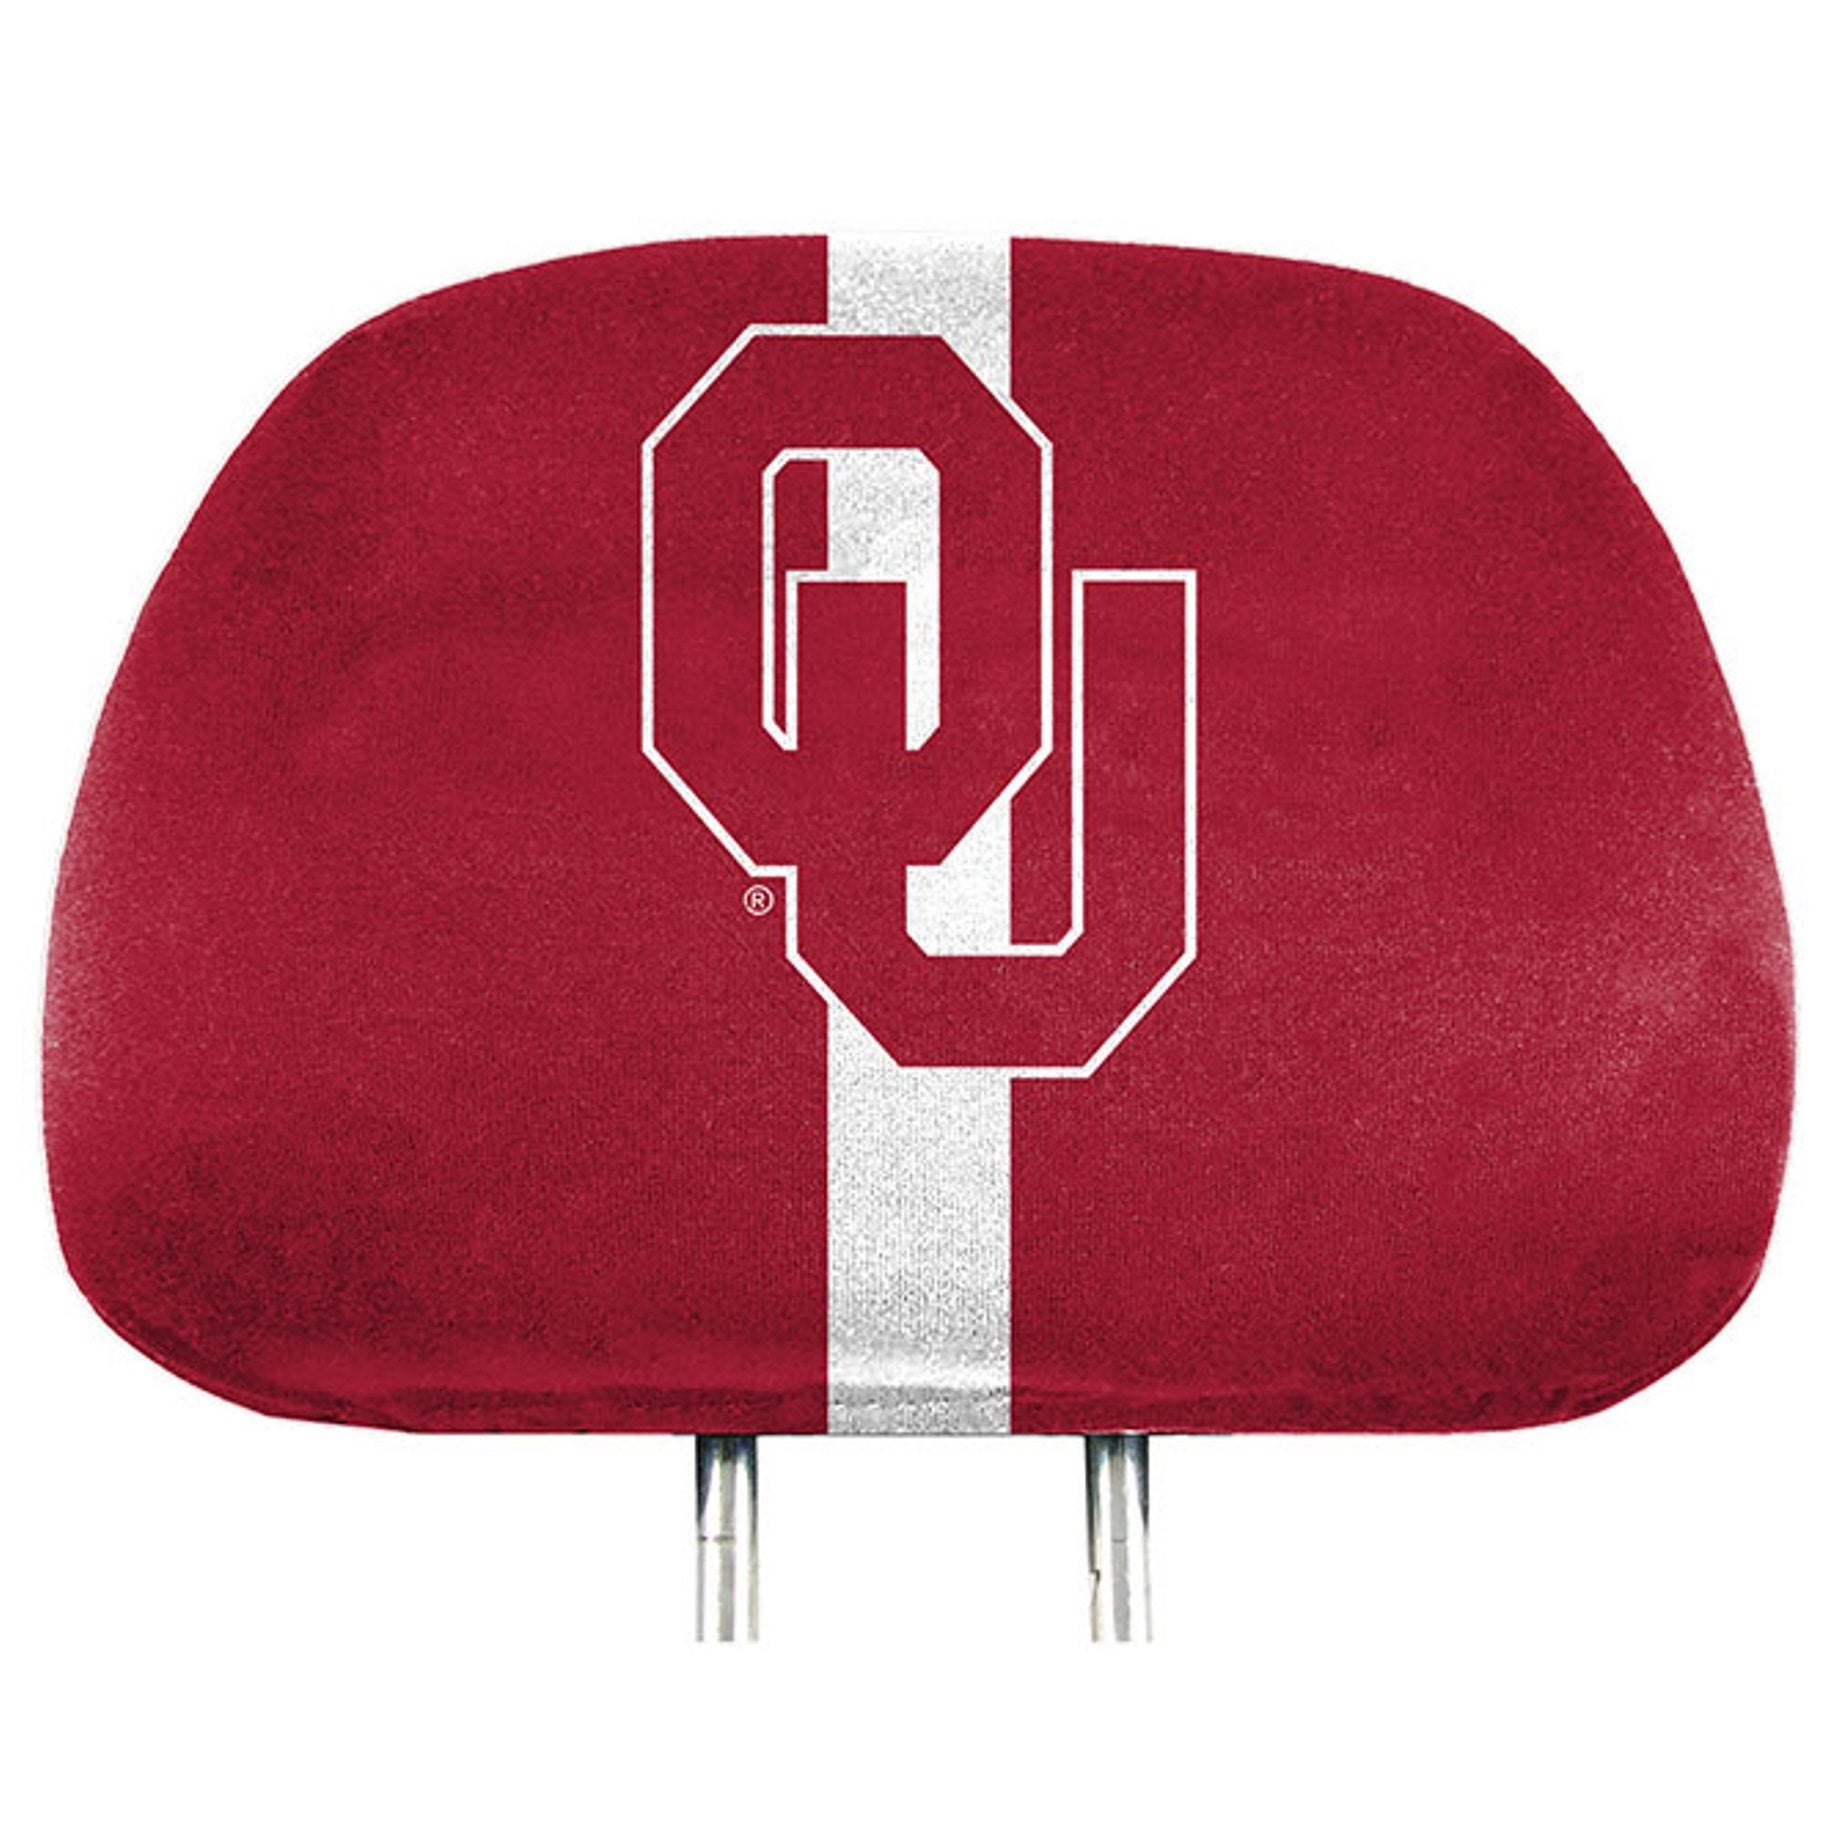 University of Oklahoma Sooners Premium Pair of Auto Head Rest Covers, Full Color Printed, Elastic, 10x14 Inch